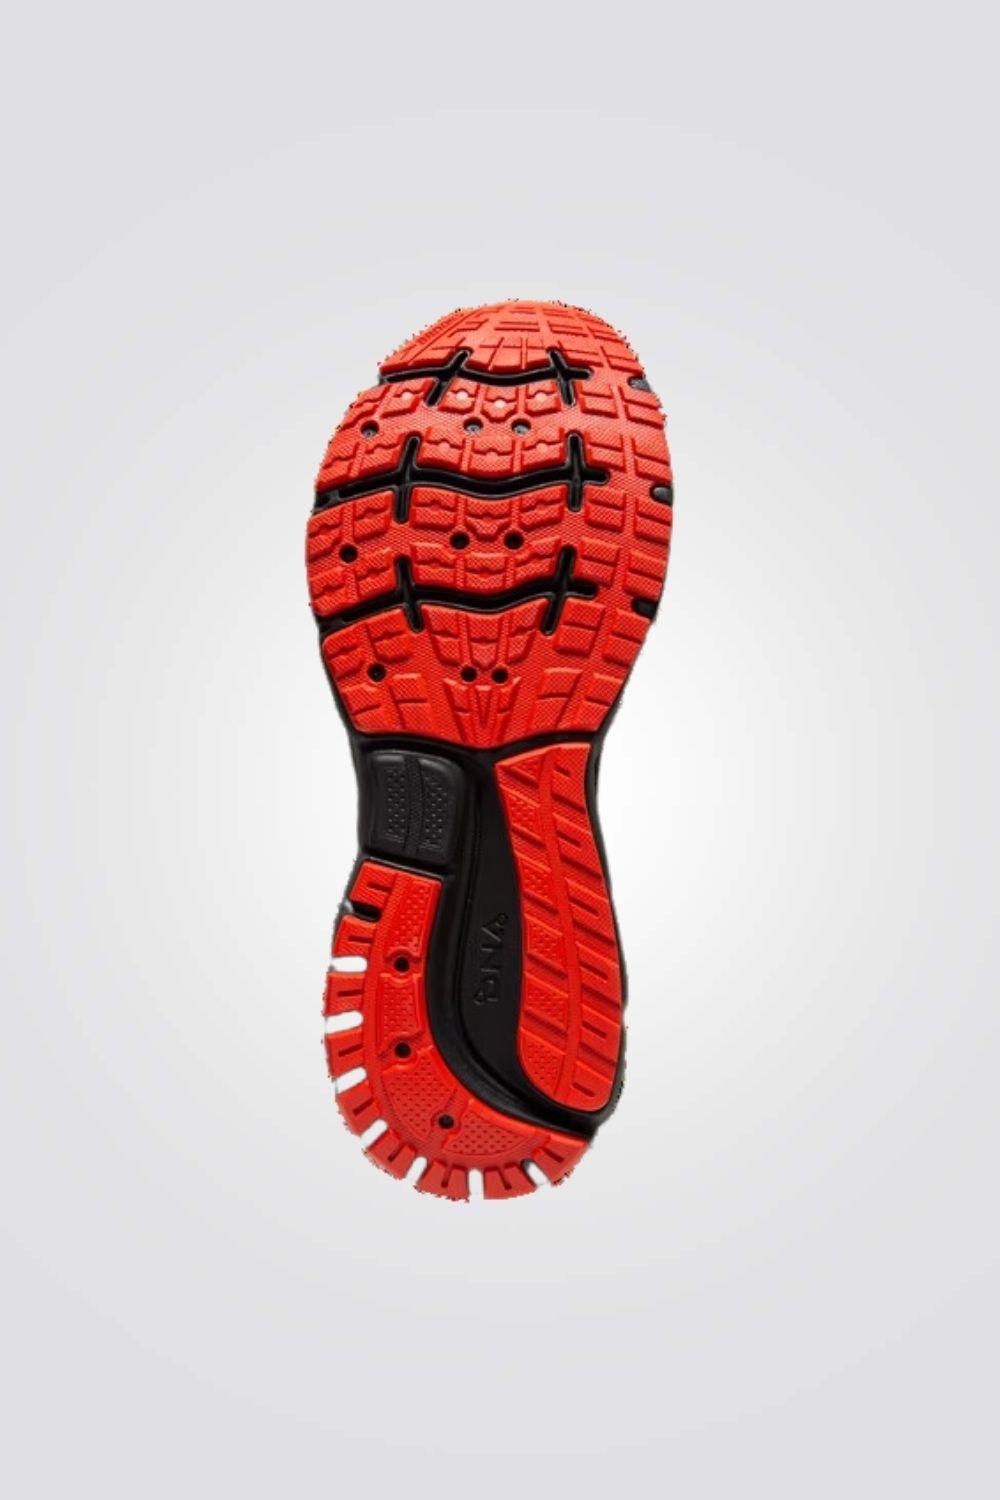 BROOKS - נעלי ספורט לגבר Trace 2 בצבע שחור - MASHBIR//365